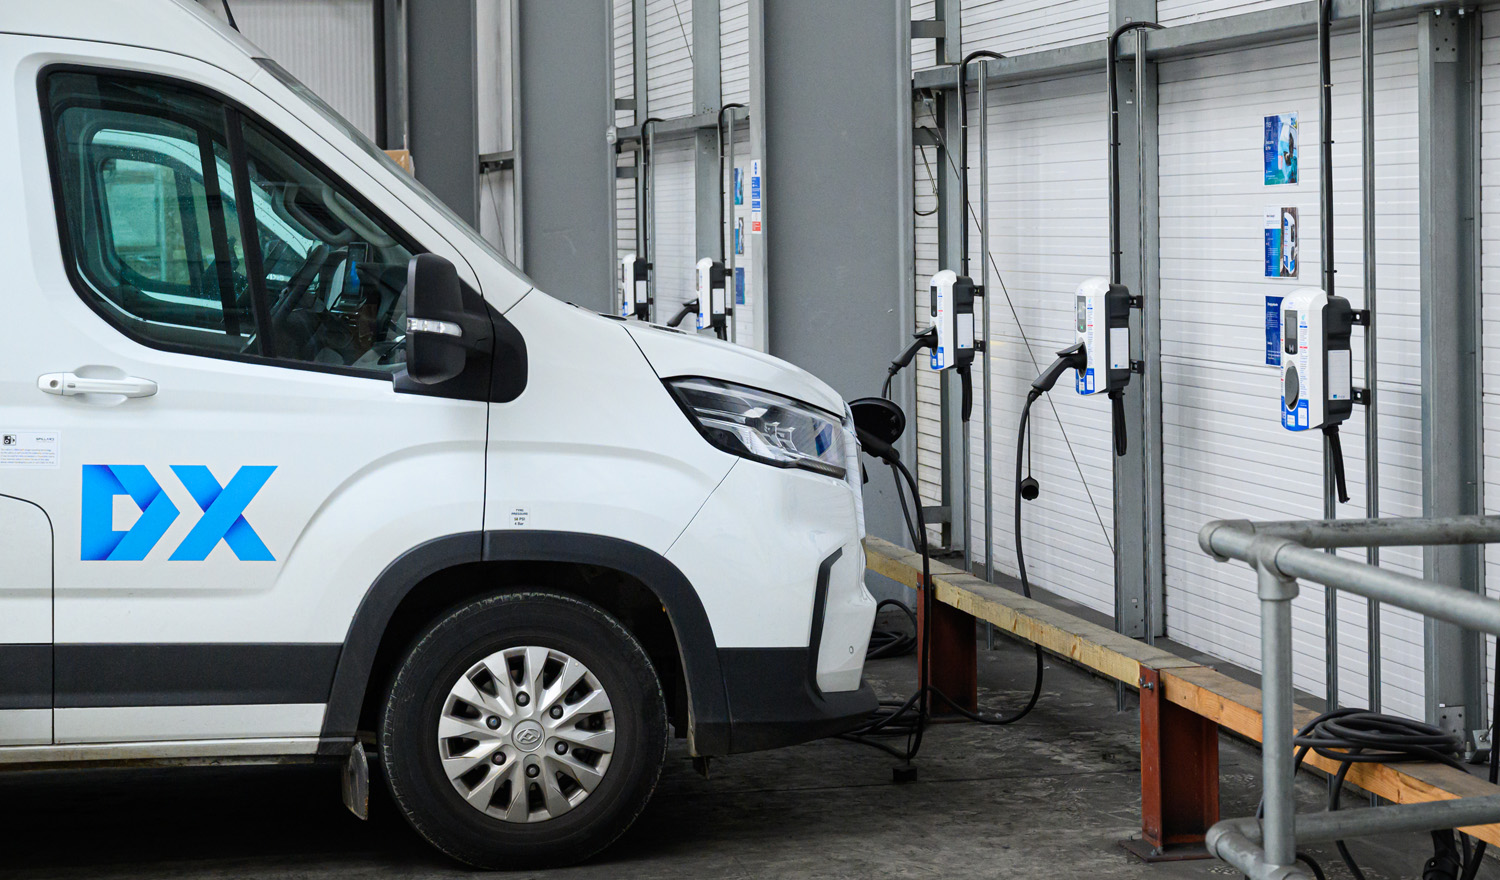 DX Delivery Van Electric Vehicle Charging